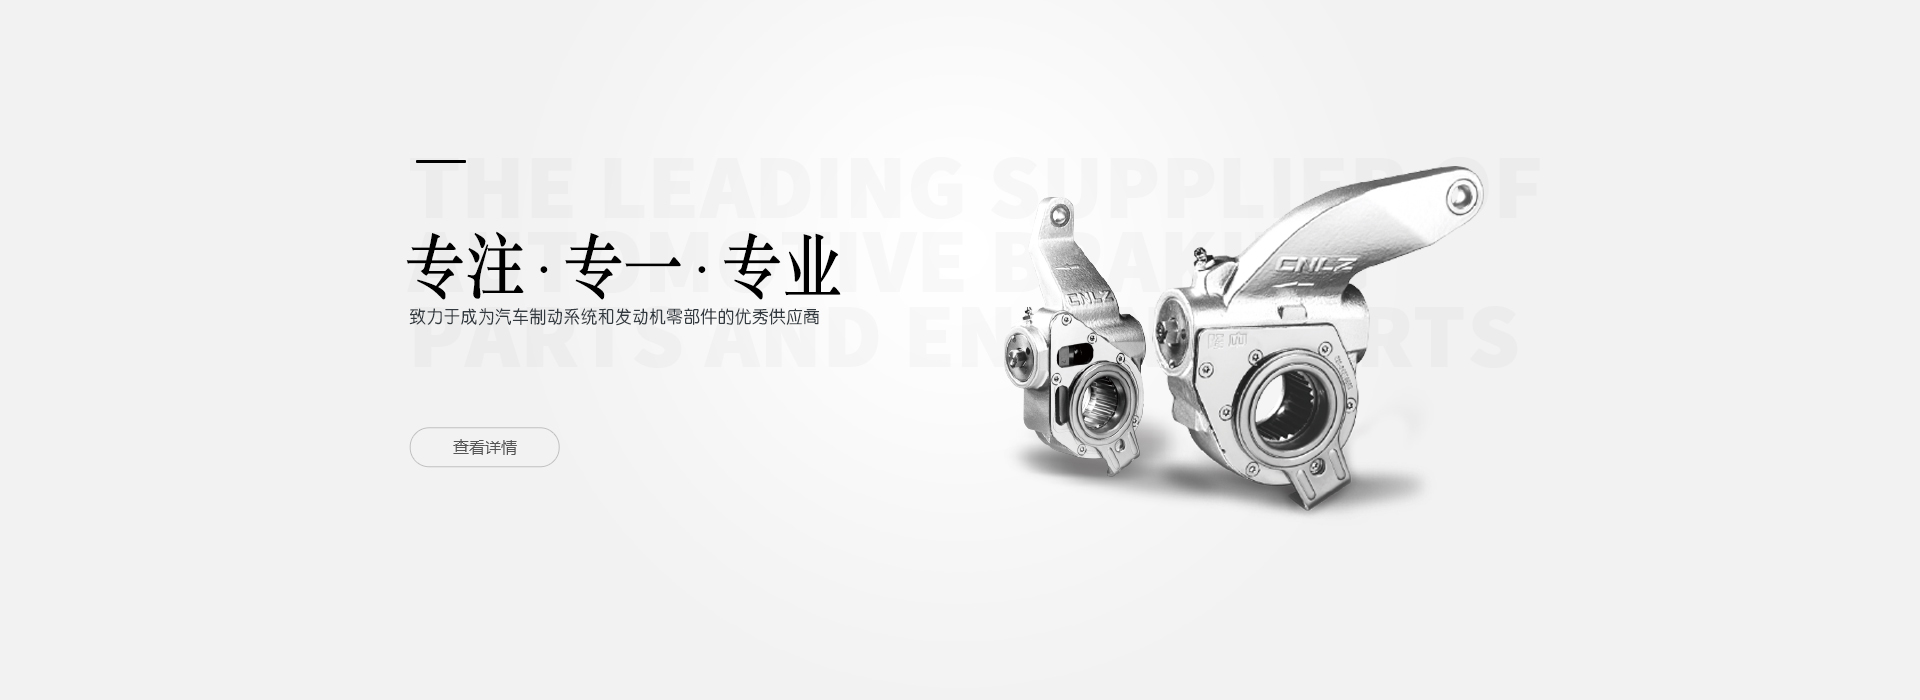 尊龙凯时·(中国)app官方网站_image8719